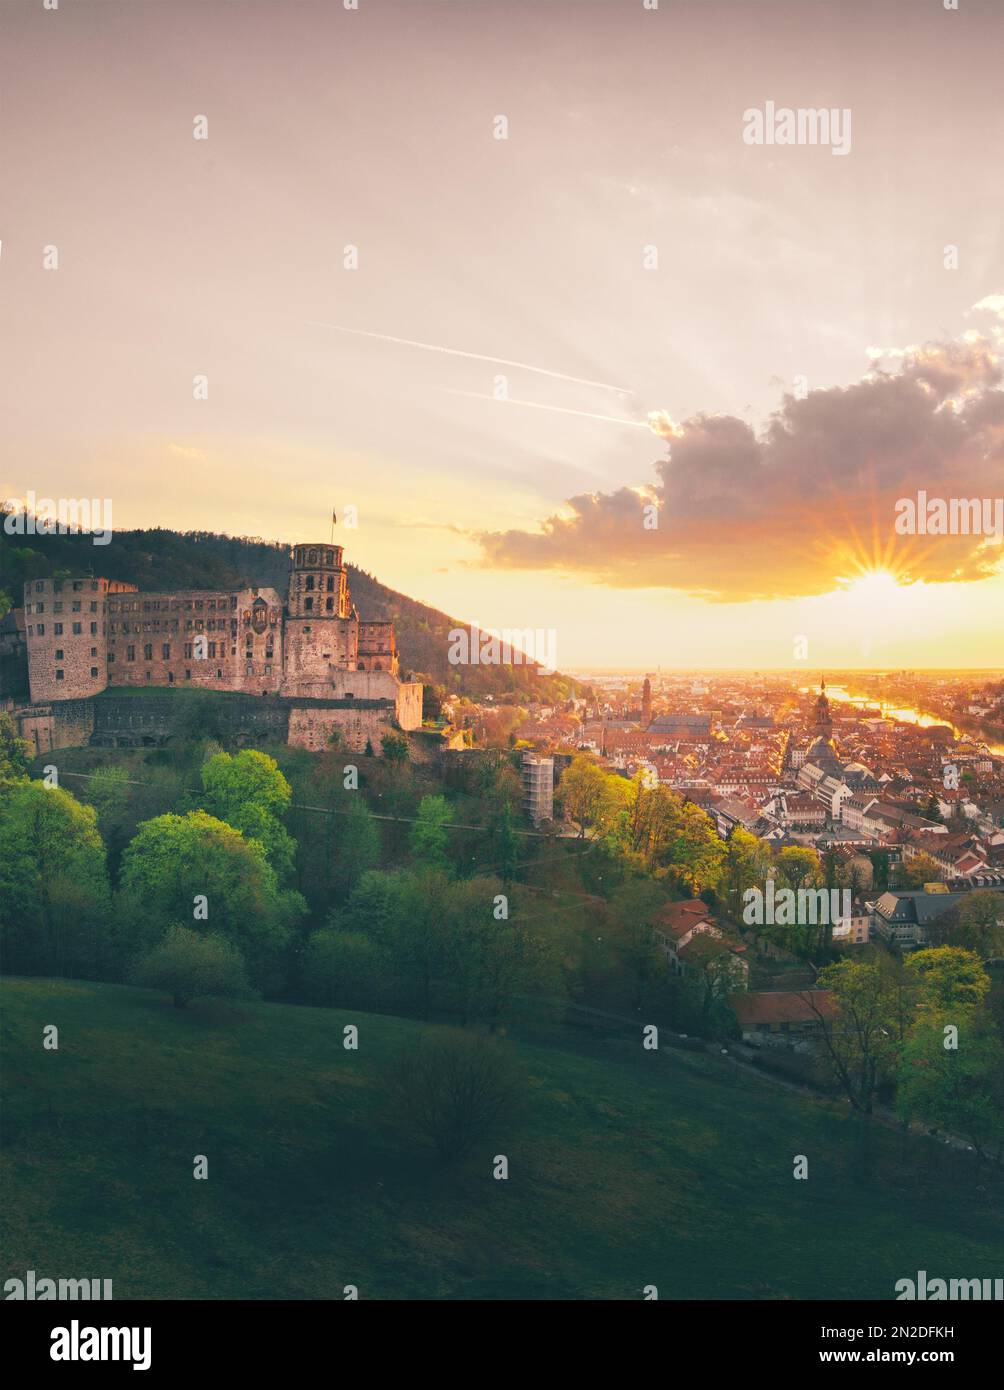 City view with Heidelberg Castle, castle ruins, sunset, backlight shot, Heidelberg, Baden-Wuerttemberg, Germany Stock Photo